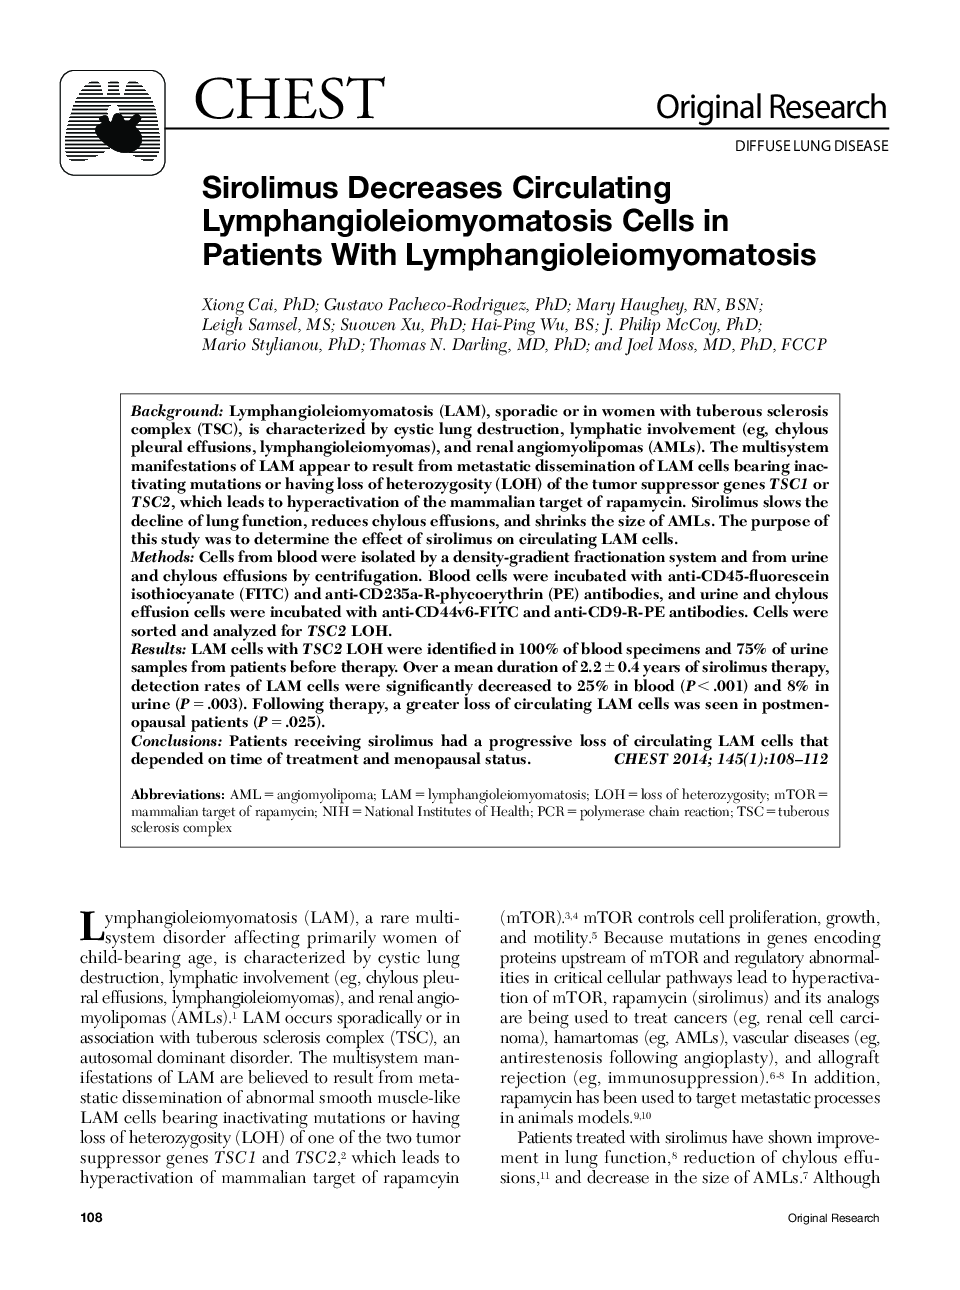 Sirolimus Decreases Circulating Lymphangioleiomyomatosis Cells in Patients With Lymphangioleiomyomatosis 